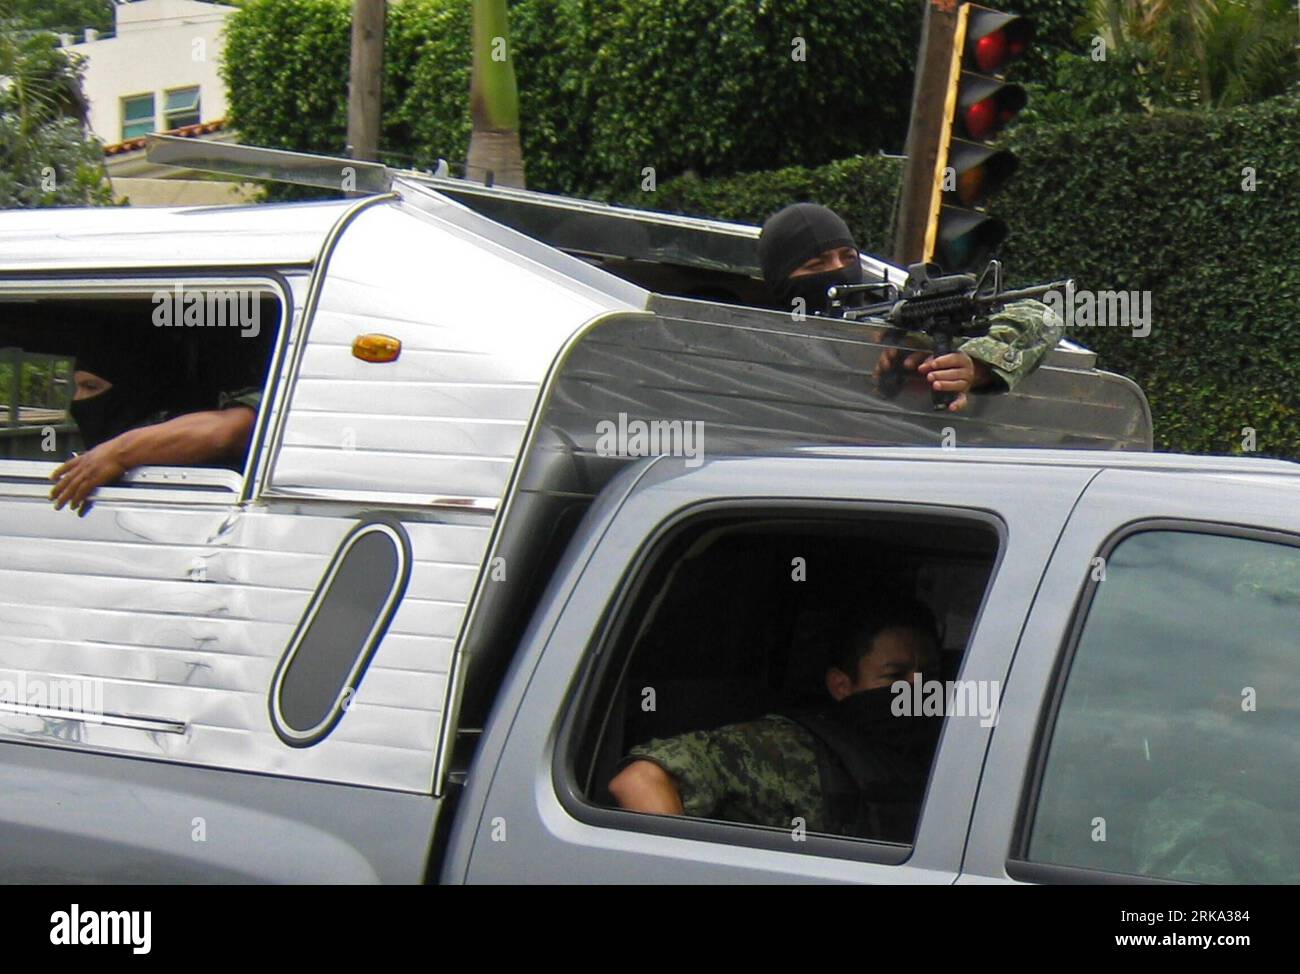 Bildnummer: 54263844  Datum: 29.07.2010  Copyright: imago/Xinhua (100730) -- GUADALAJARA, July 30, 2010 (Xinhua) -- Soldiers wait outside the residence of the drug dealers in the western city of Guadalajara, Mexico, July 29, 2010. Ignacio Nacho Coronel, a top leader of a major drug cartel was killed during a military raid, according to the Mexican Defense Department. (Xinhua/Jose Antonio Neri) (lyi) (1)MEXICO-DRUG-LEADER-KILLING PUBLICATIONxNOTxINxCHN Gesellschaft Militär Armee Drogen Drogenhandel Tod Chef Drogenkartell erschossen Premiumd xint kbdig xub 2010 quer   o0 Soldat, bewaffnet, vermu Stock Photo